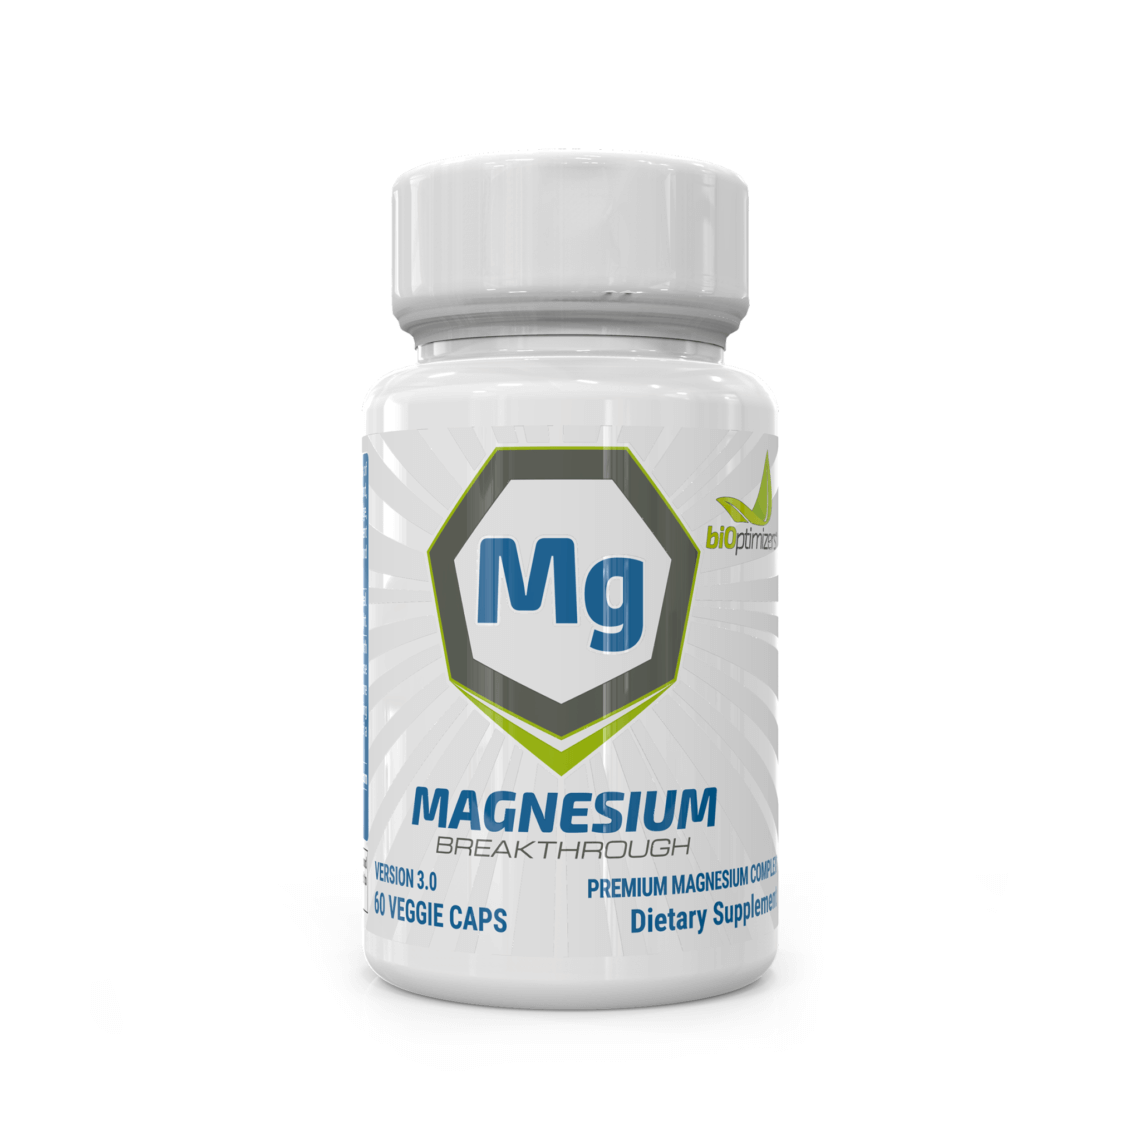 Buy Magnesium Breakthrough - What Is The Best Magnesium Supplement